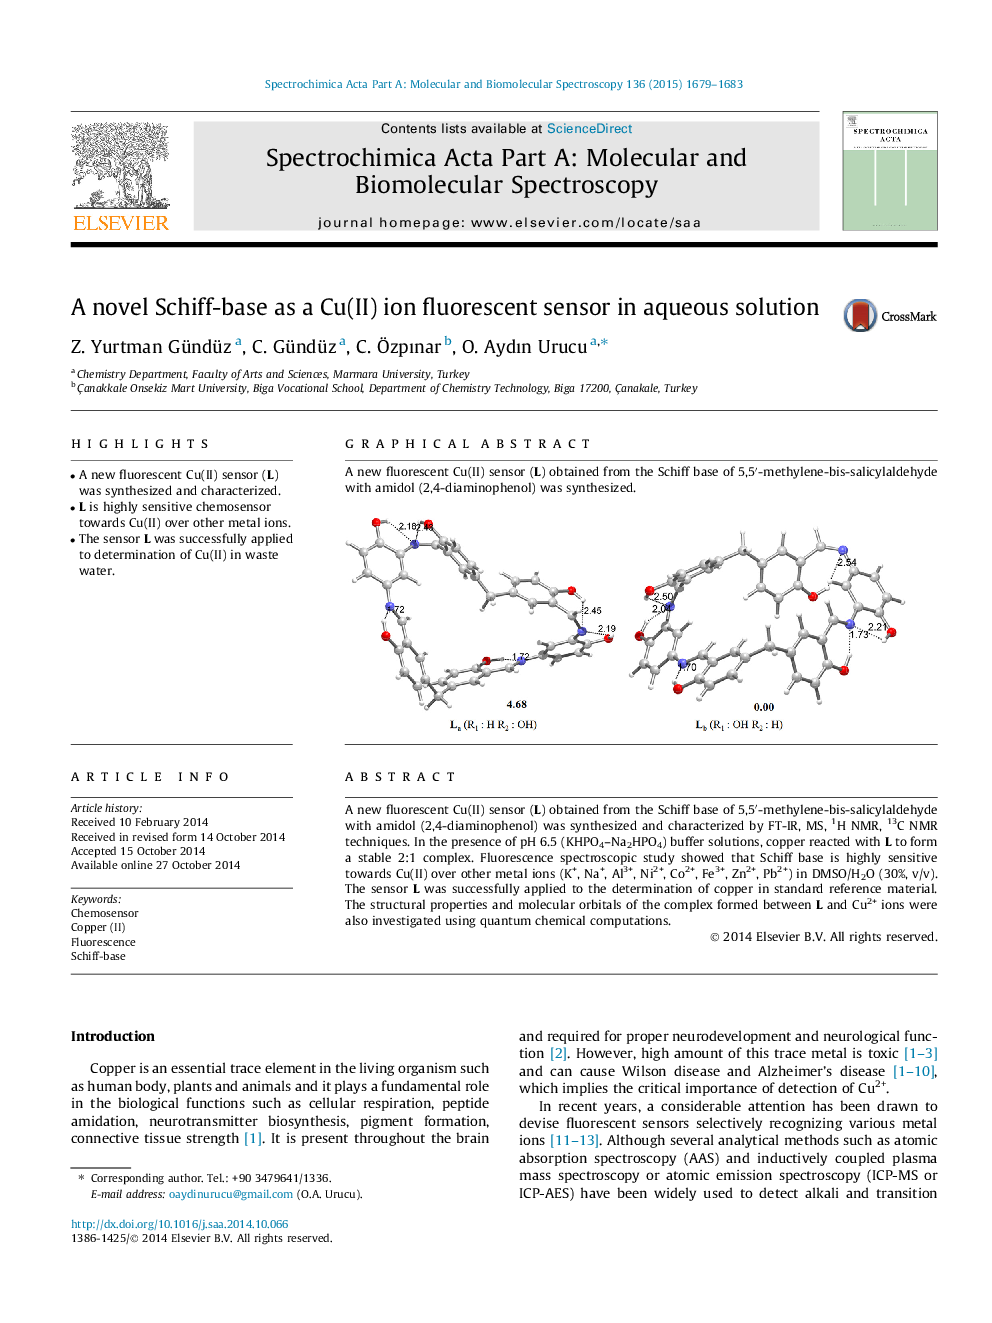 A novel Schiff-base as a Cu(II) ion fluorescent sensor in aqueous solution